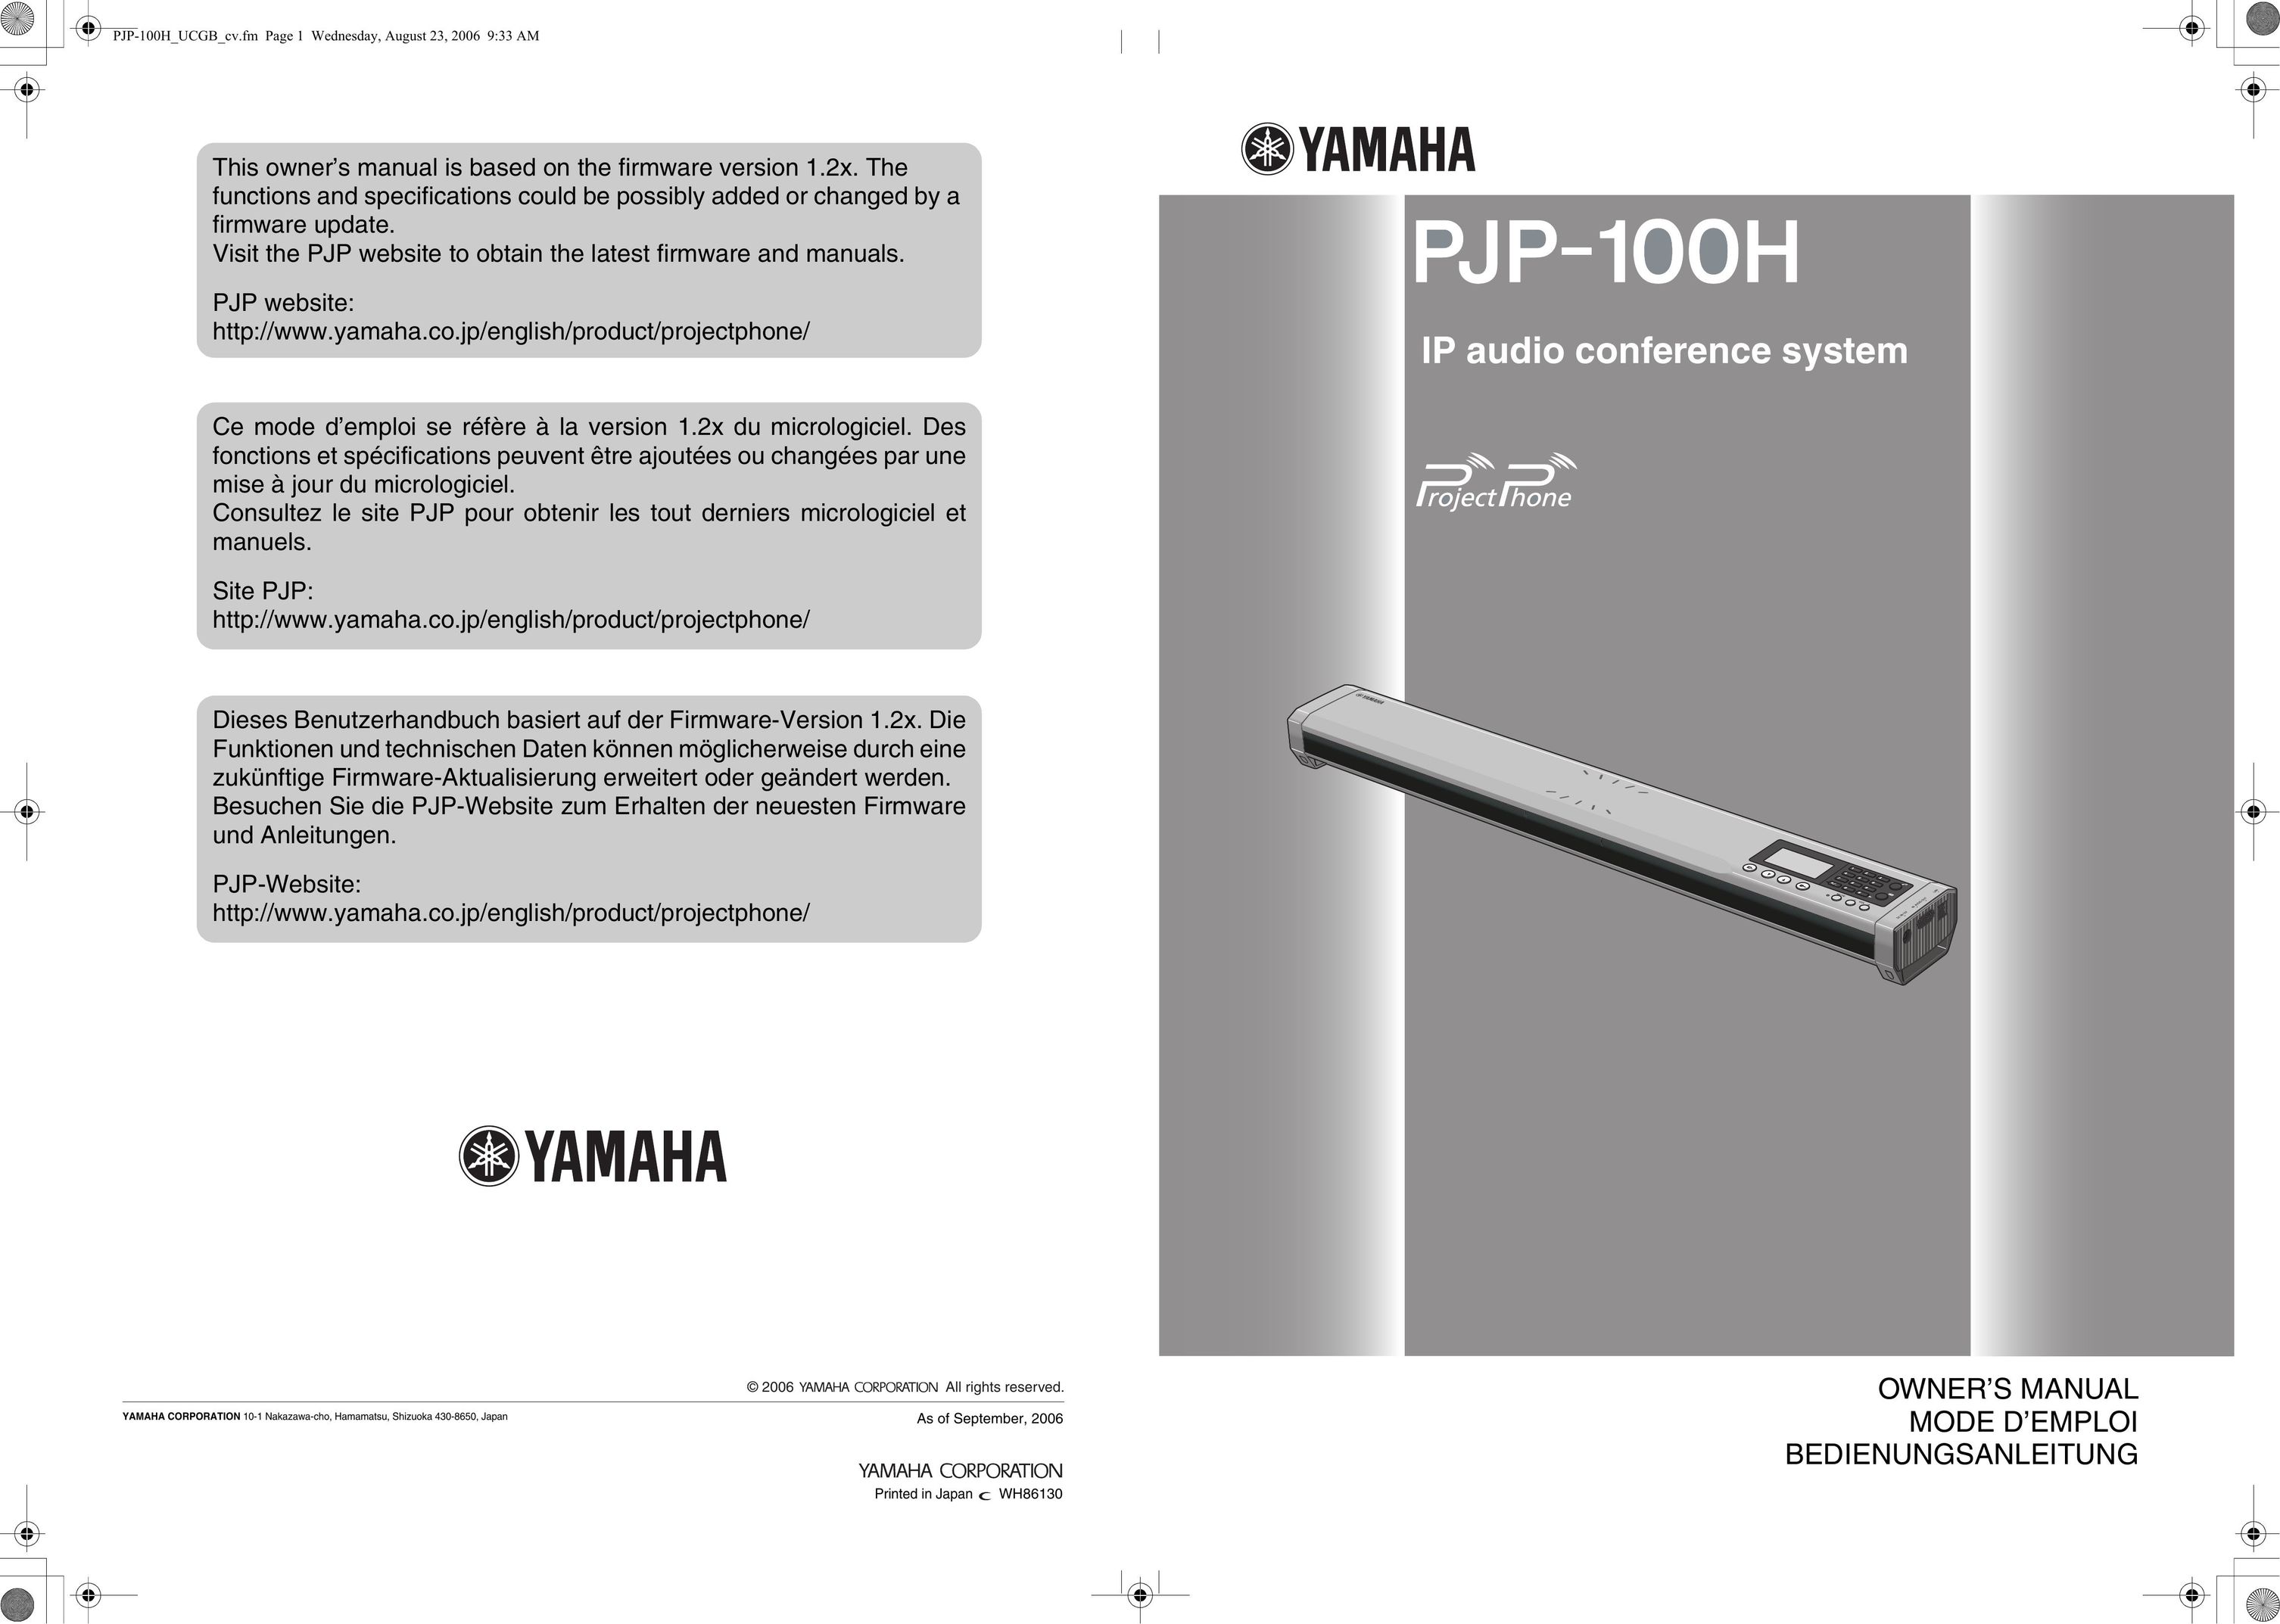 Yamaha PJP-100H Conference Phone User Manual